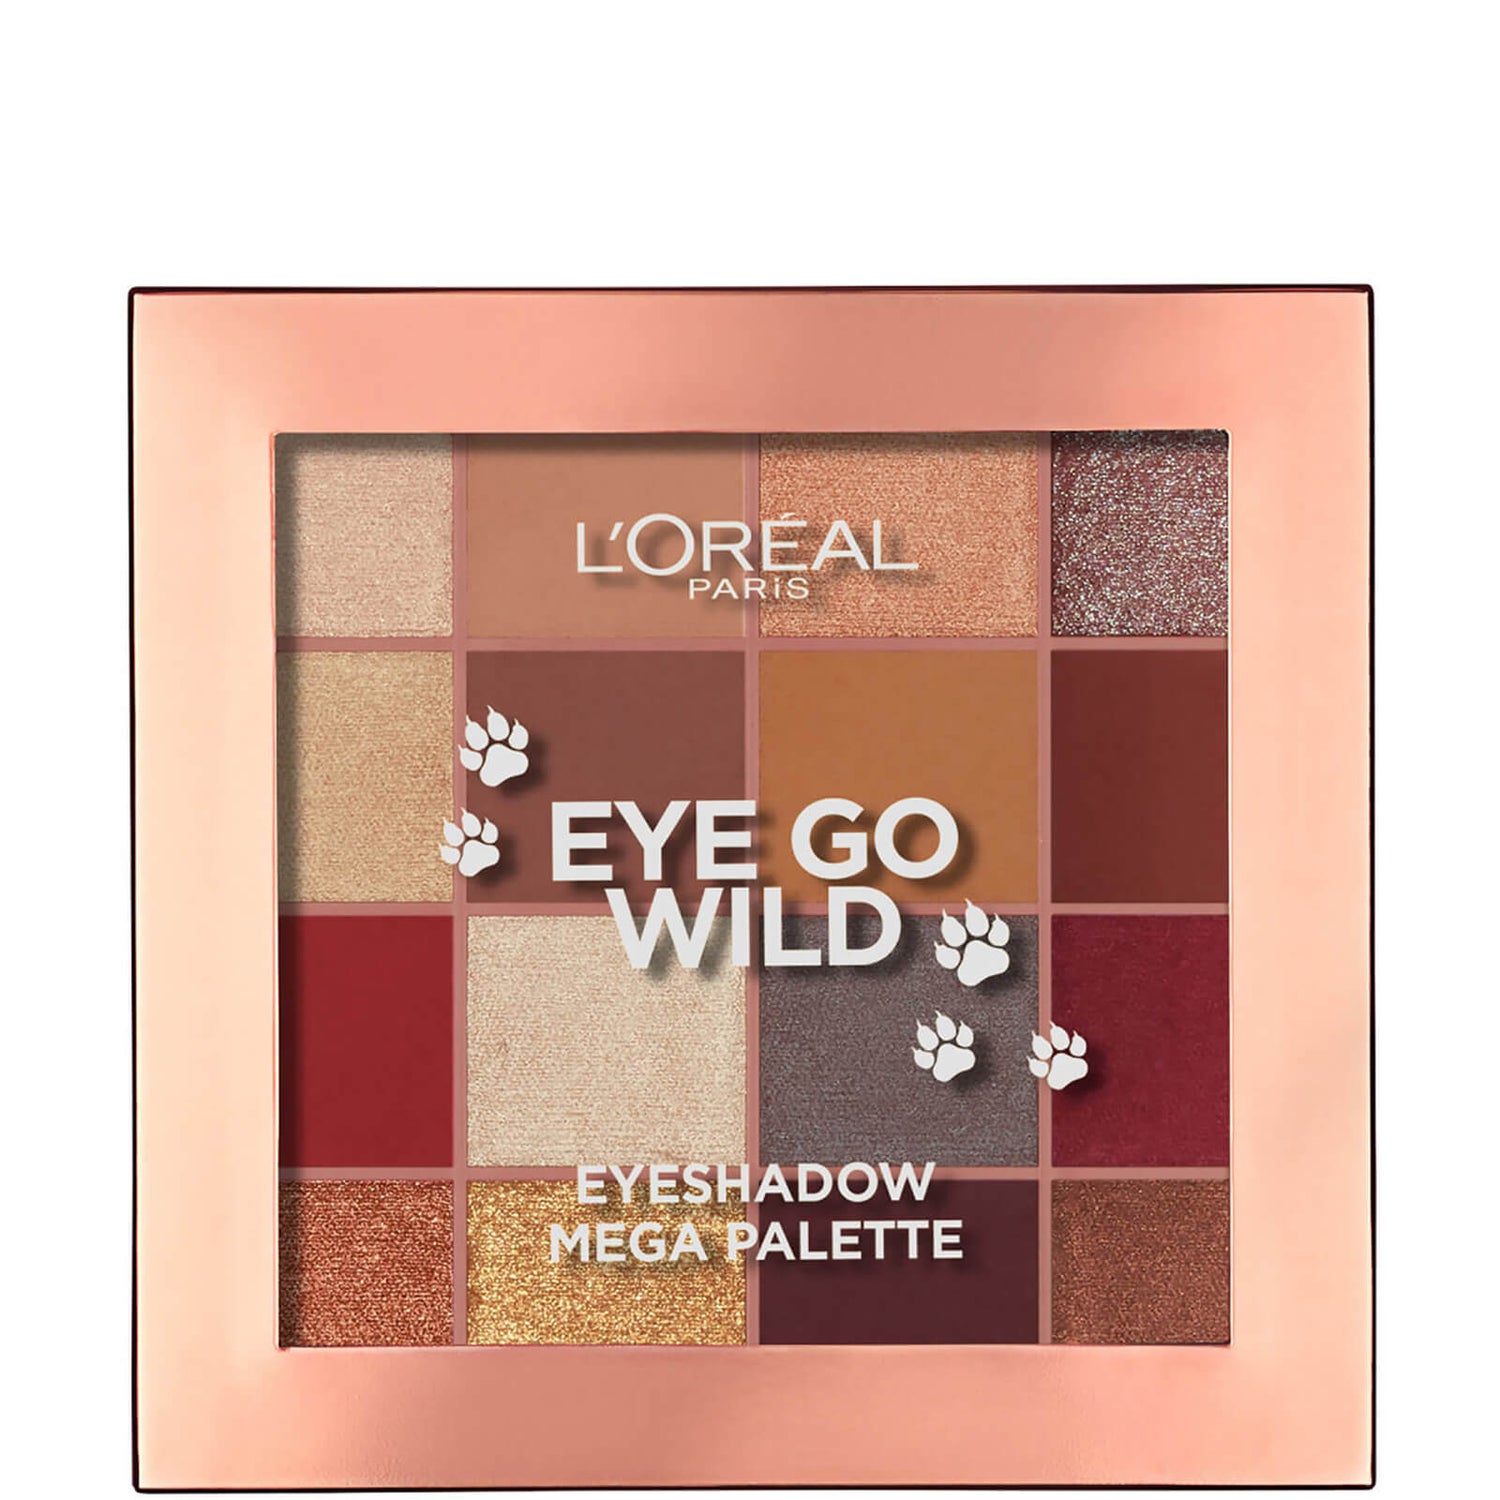 L'Oréal Paris Eye Go Wild Eyeshadow Palette